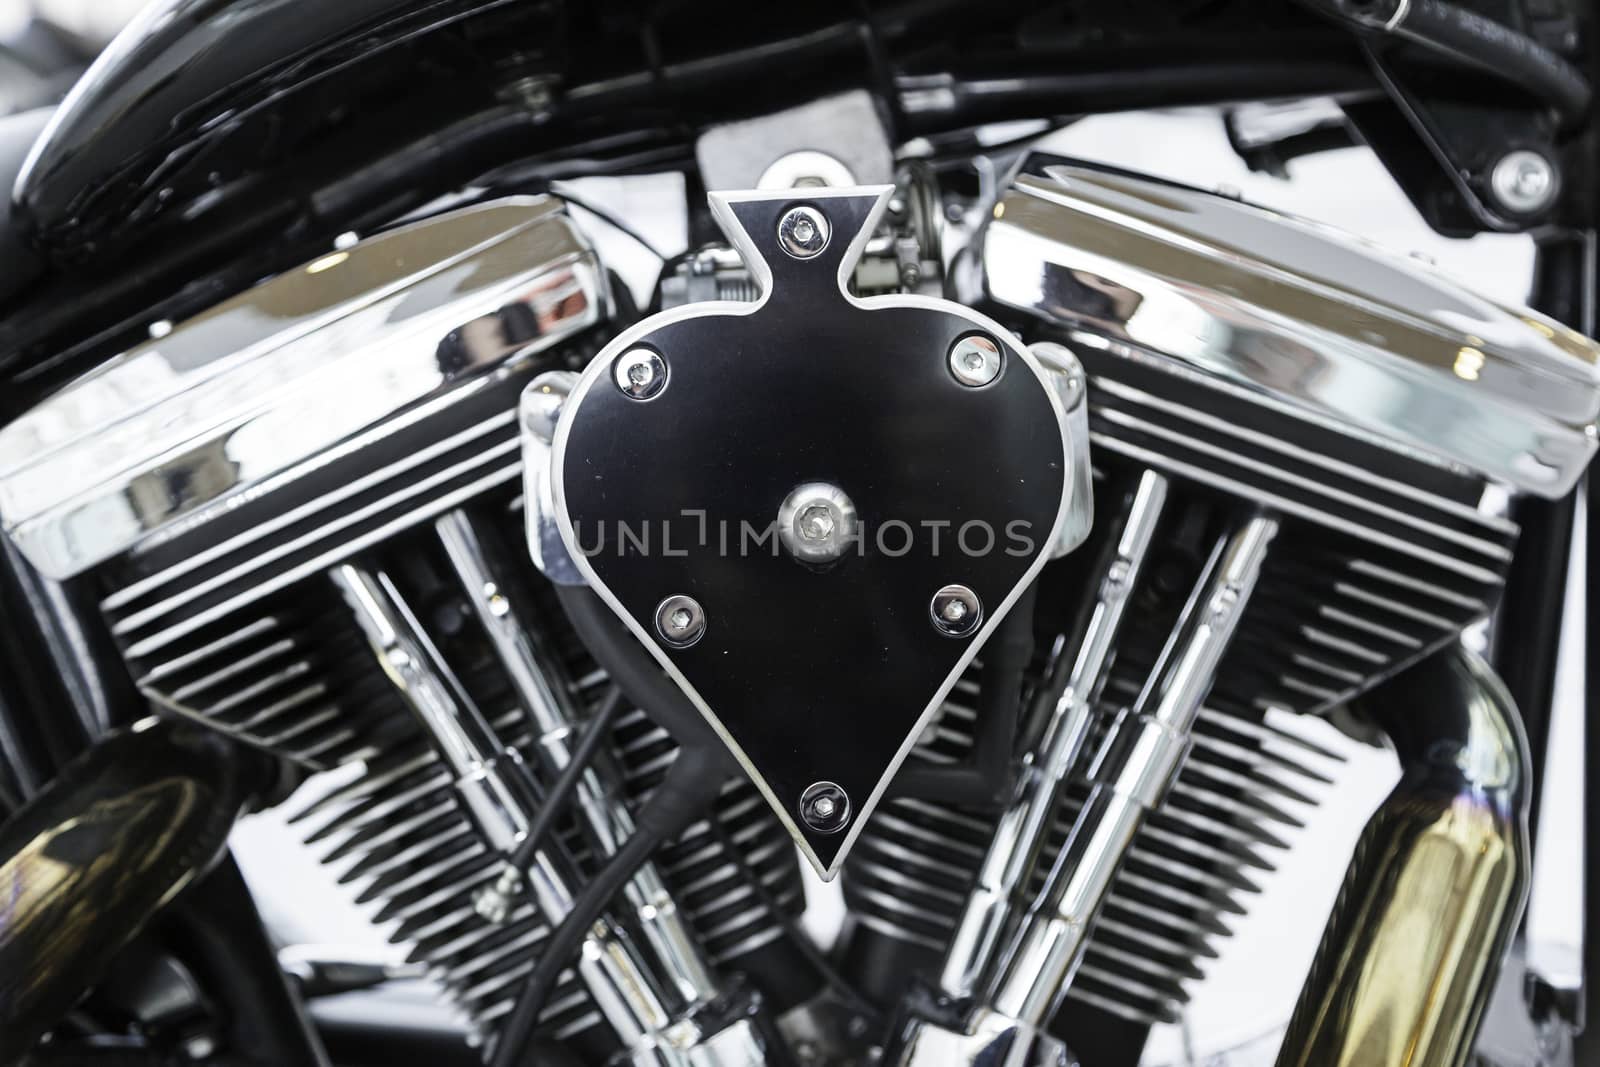 Motorcycle engine by esebene